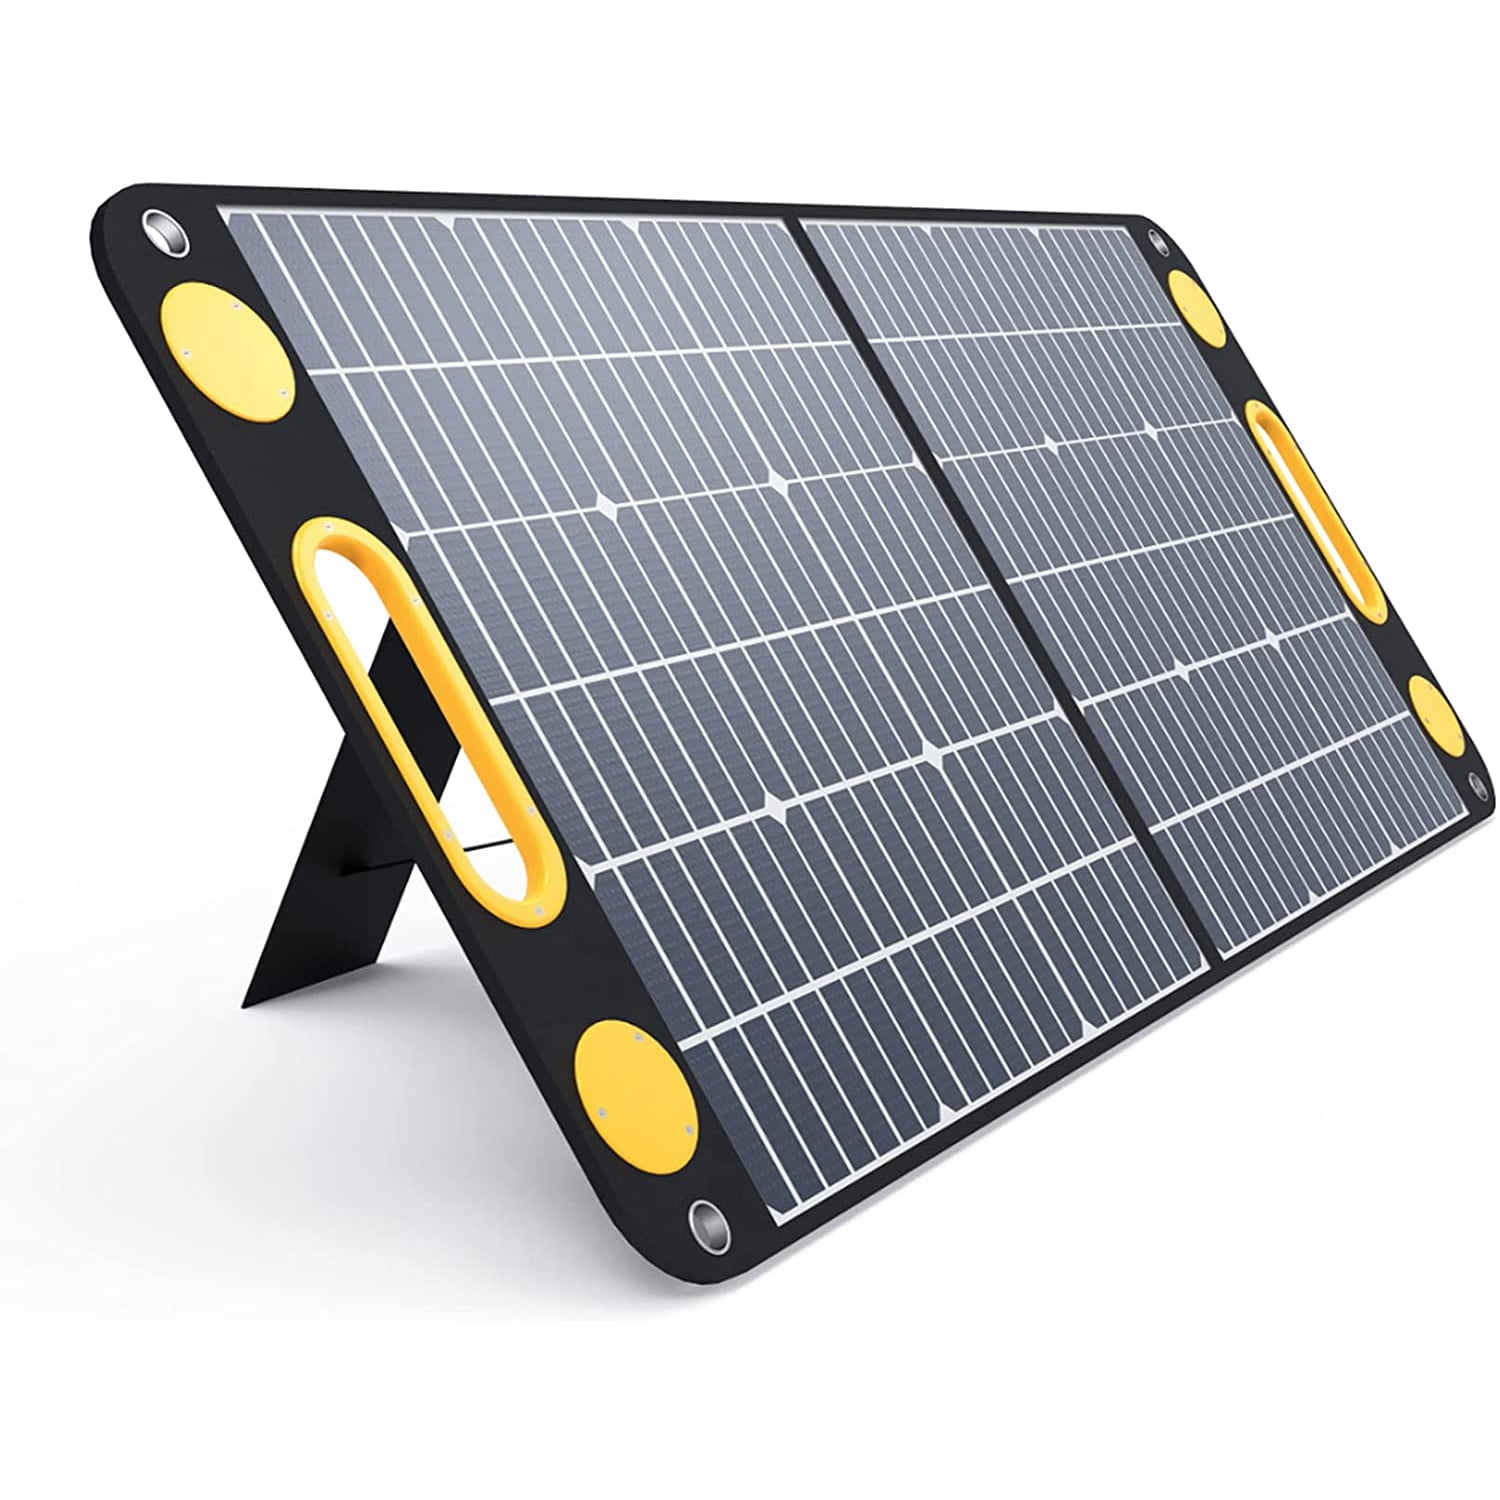 Tragbare Solar Ladegerät Panel Mit USB Ports Für Handy Tablet GPS IPhone IPad